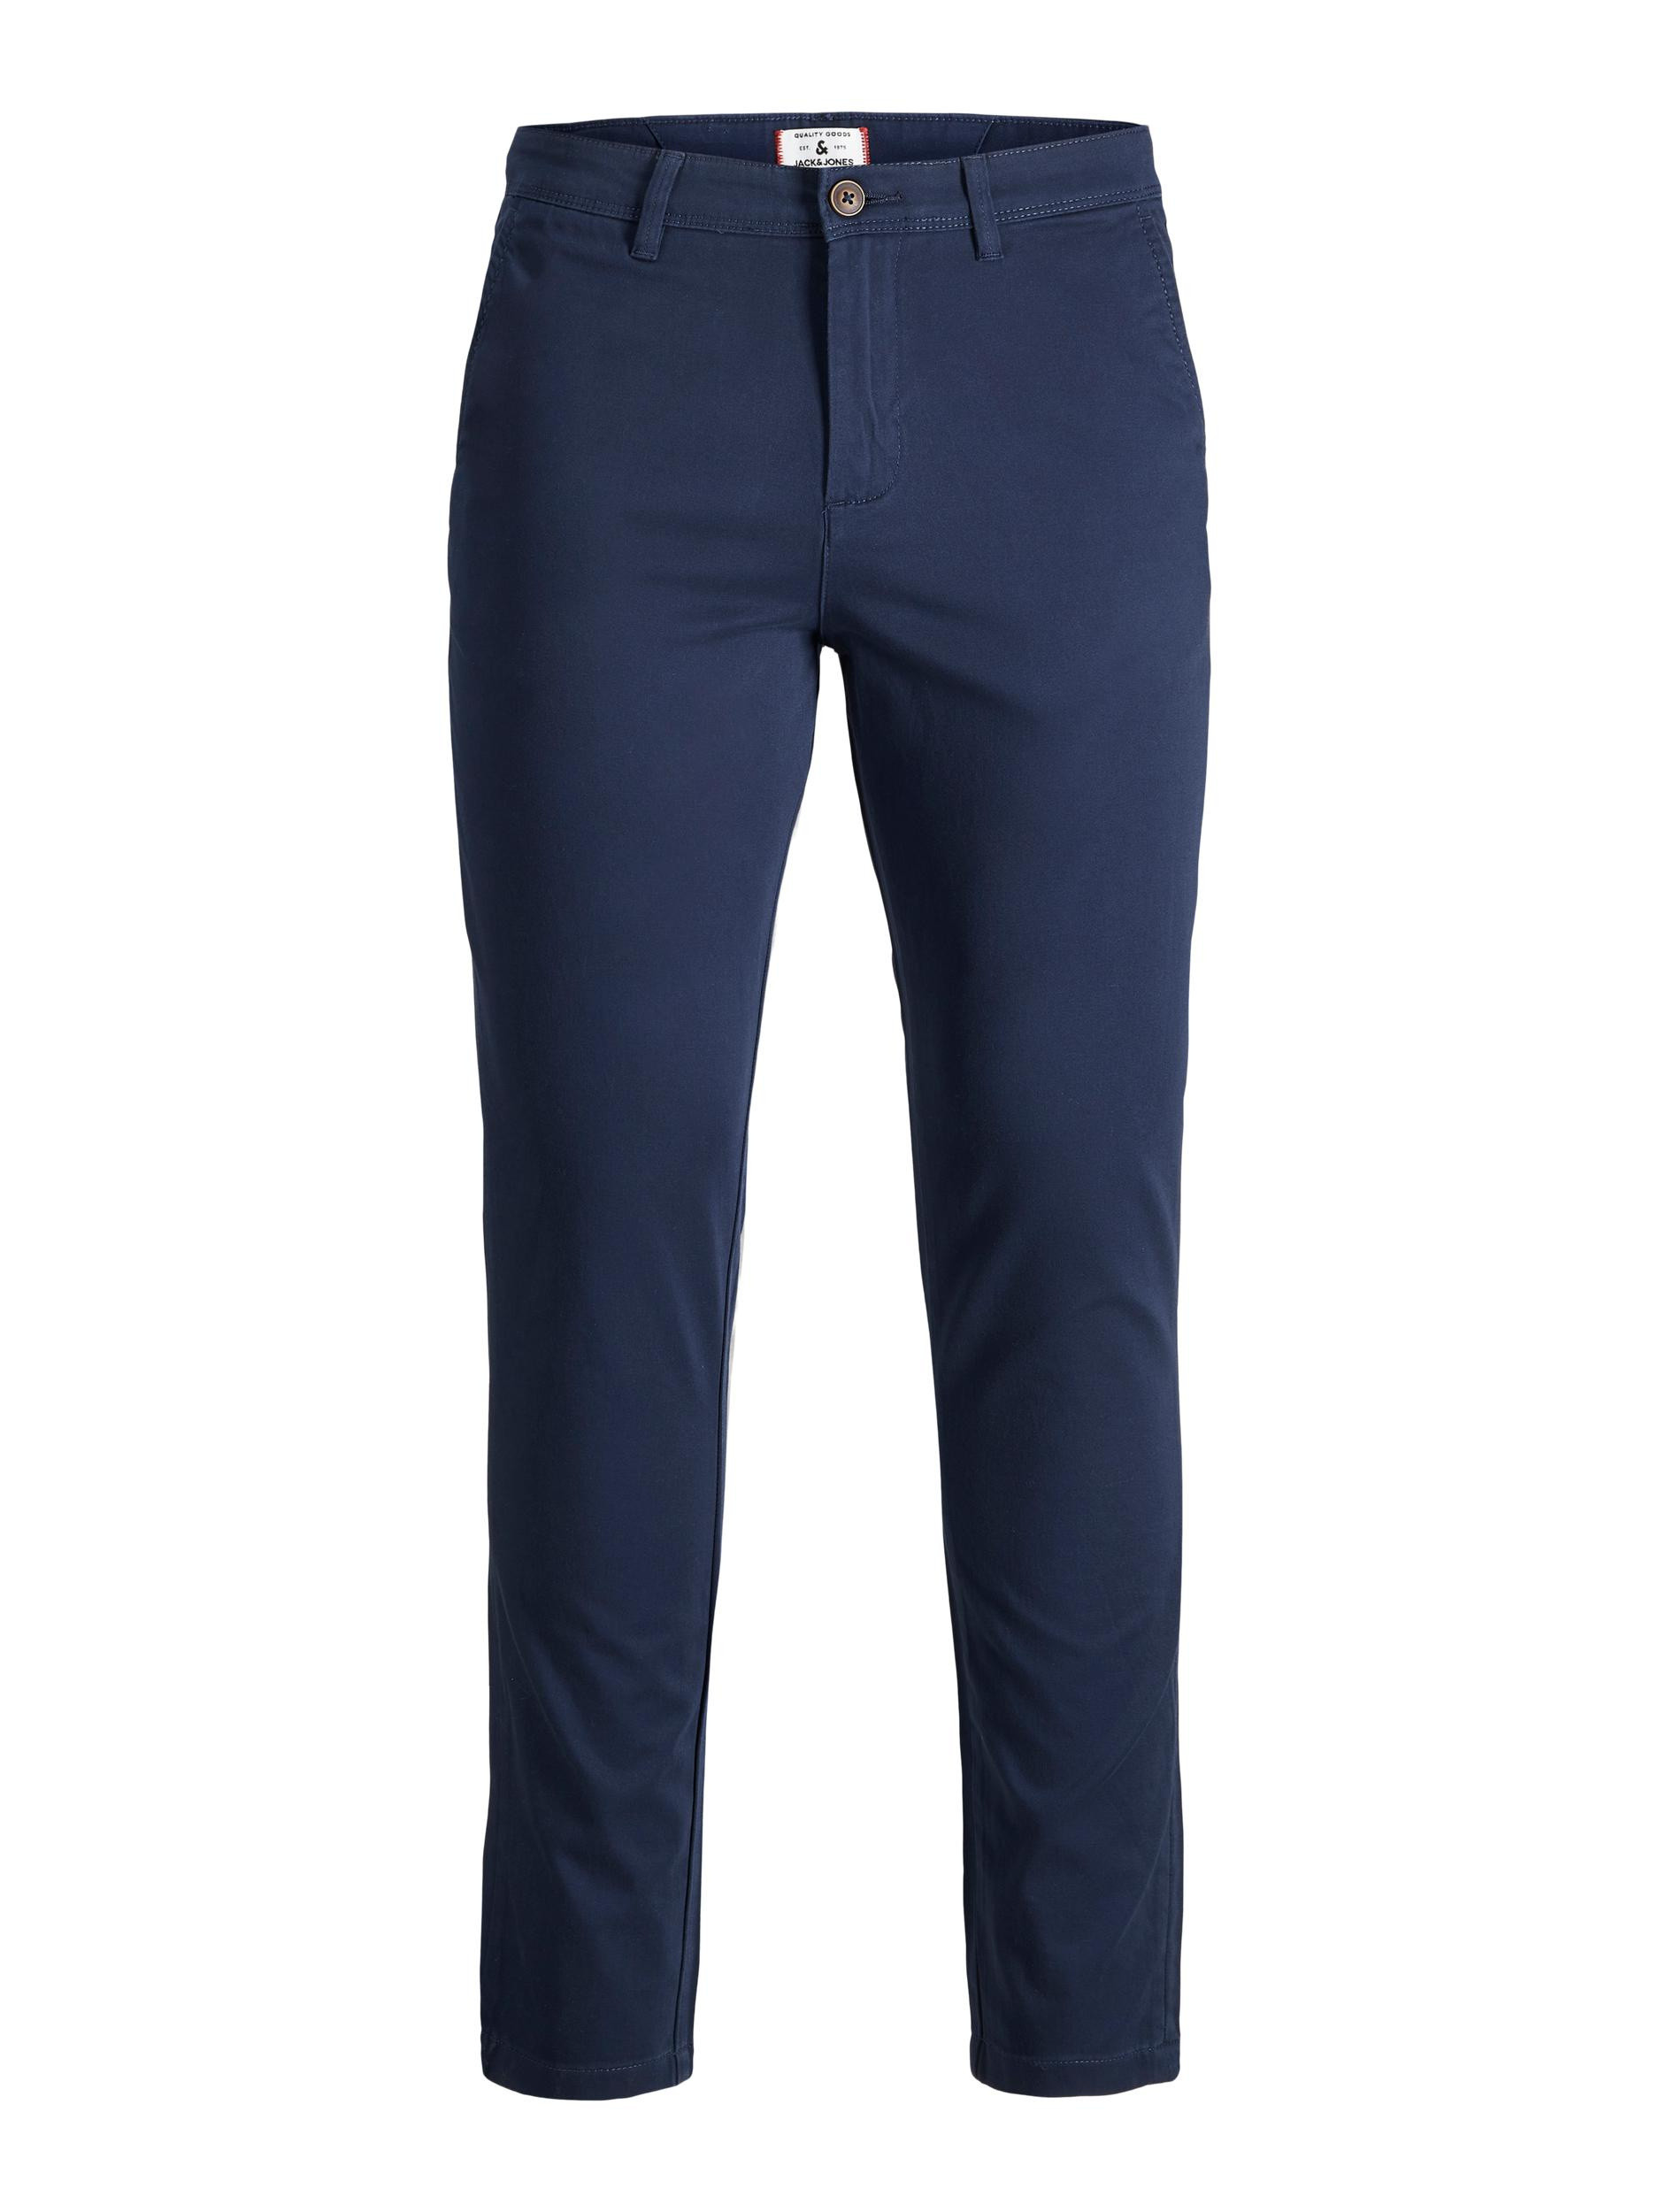 Pantaloni chino slim fit Marco, Blu, large